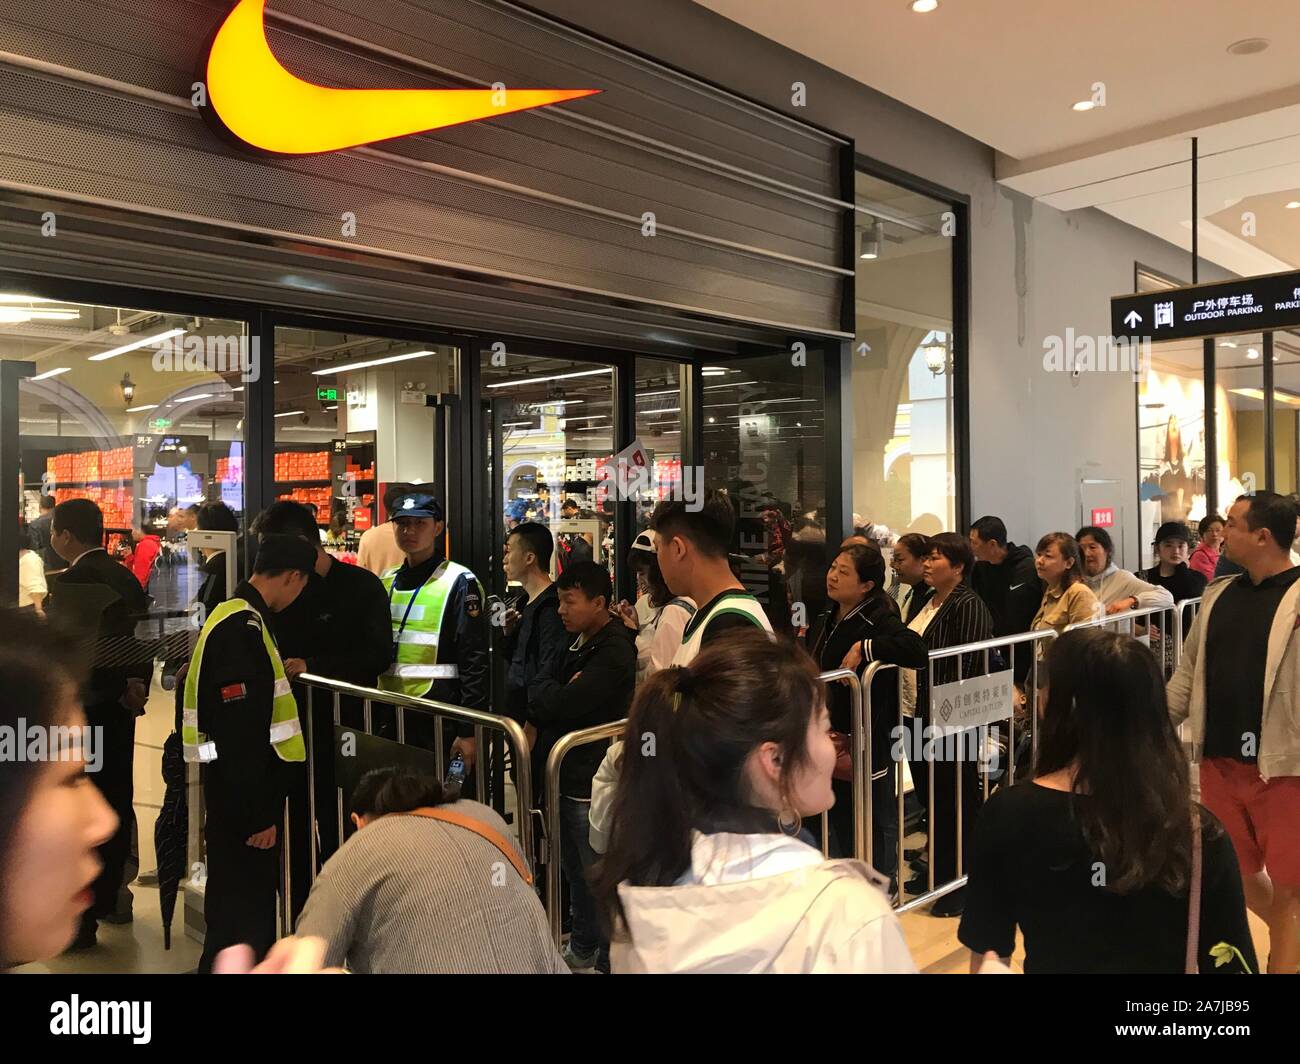 Nike Store On Line Deals, 56% OFF | www.ingeniovirtual.com